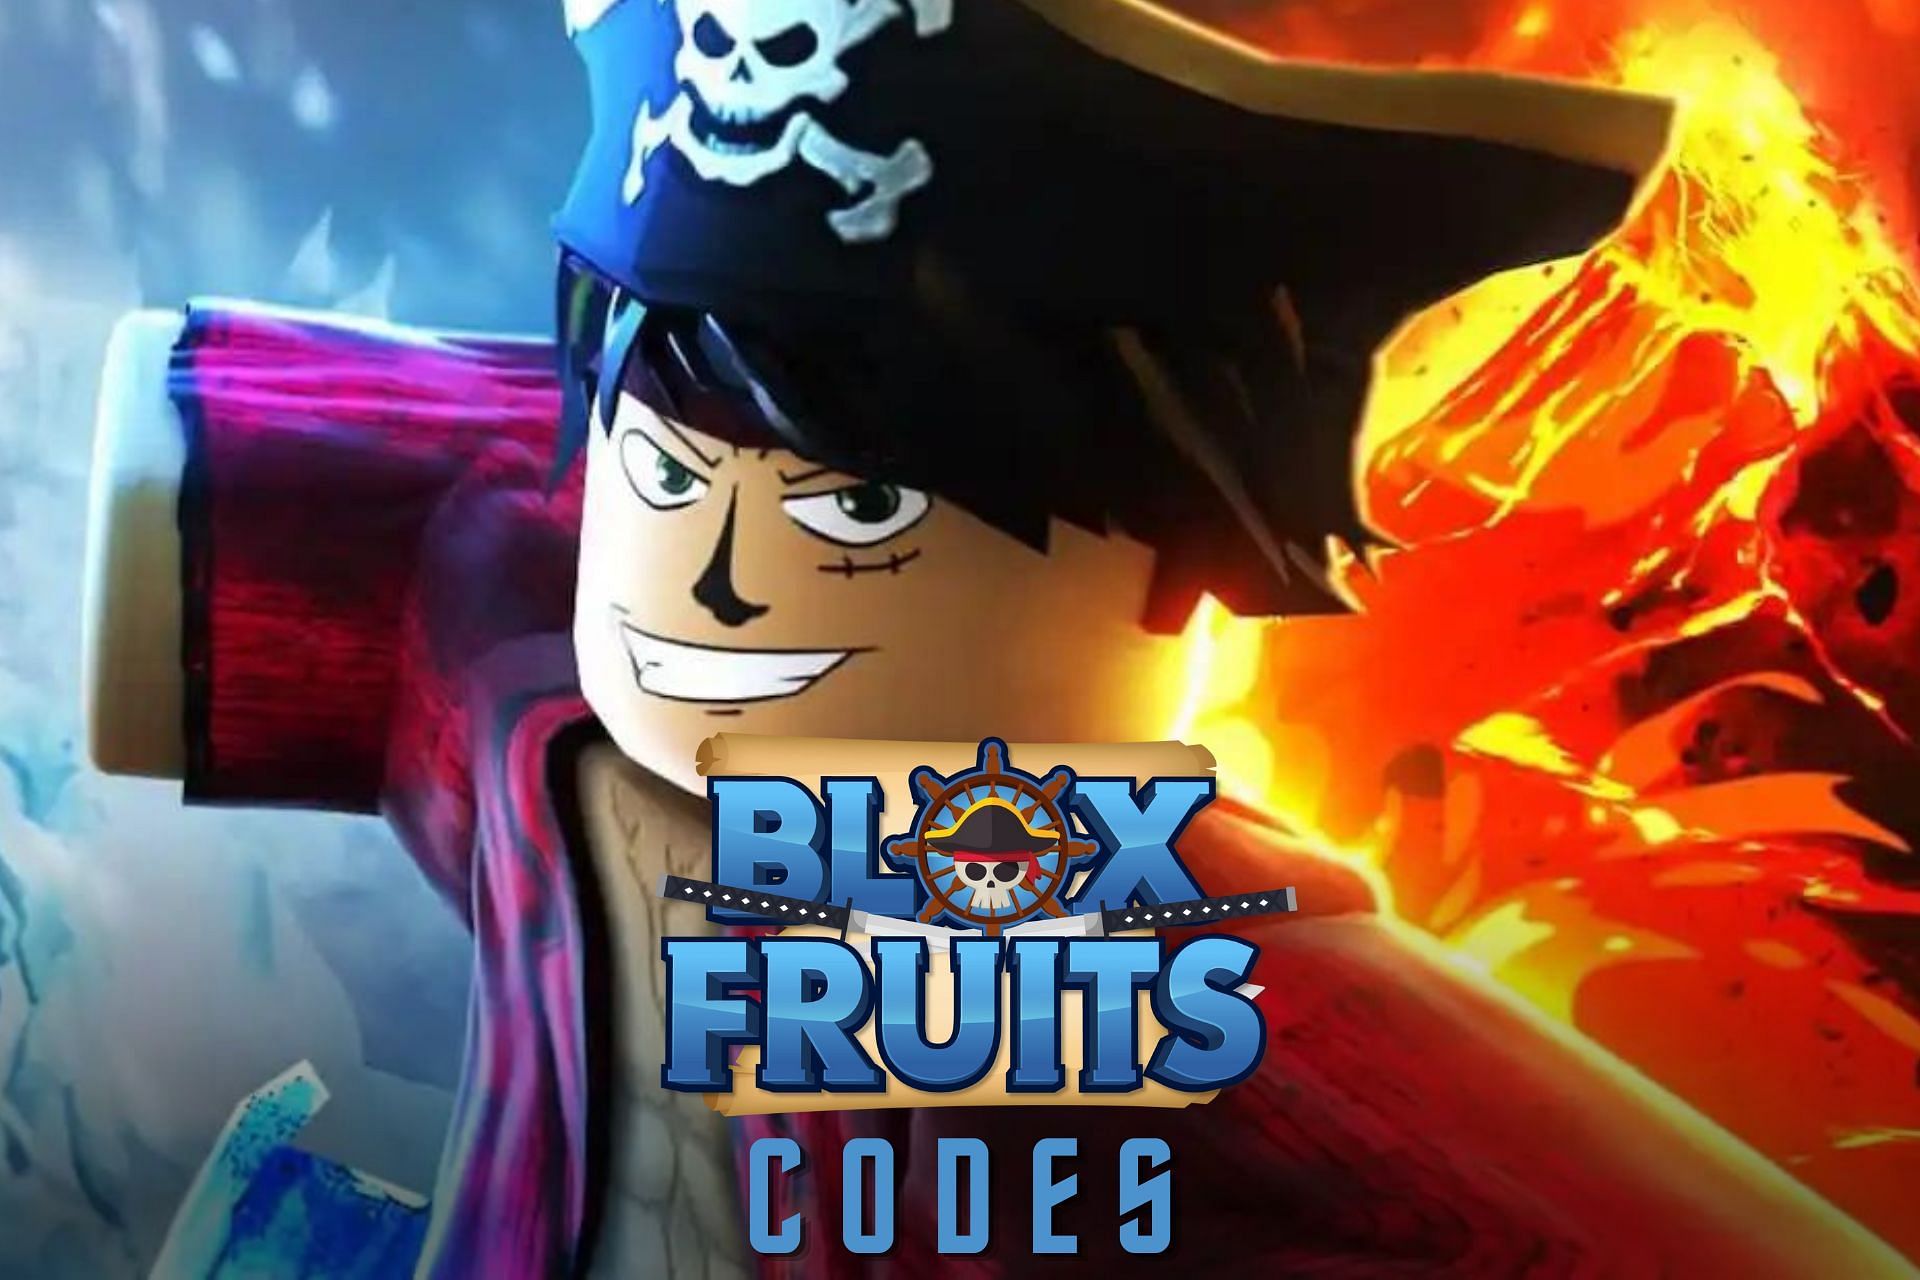 Blox Fruits Codes (December 2023) - Roblox